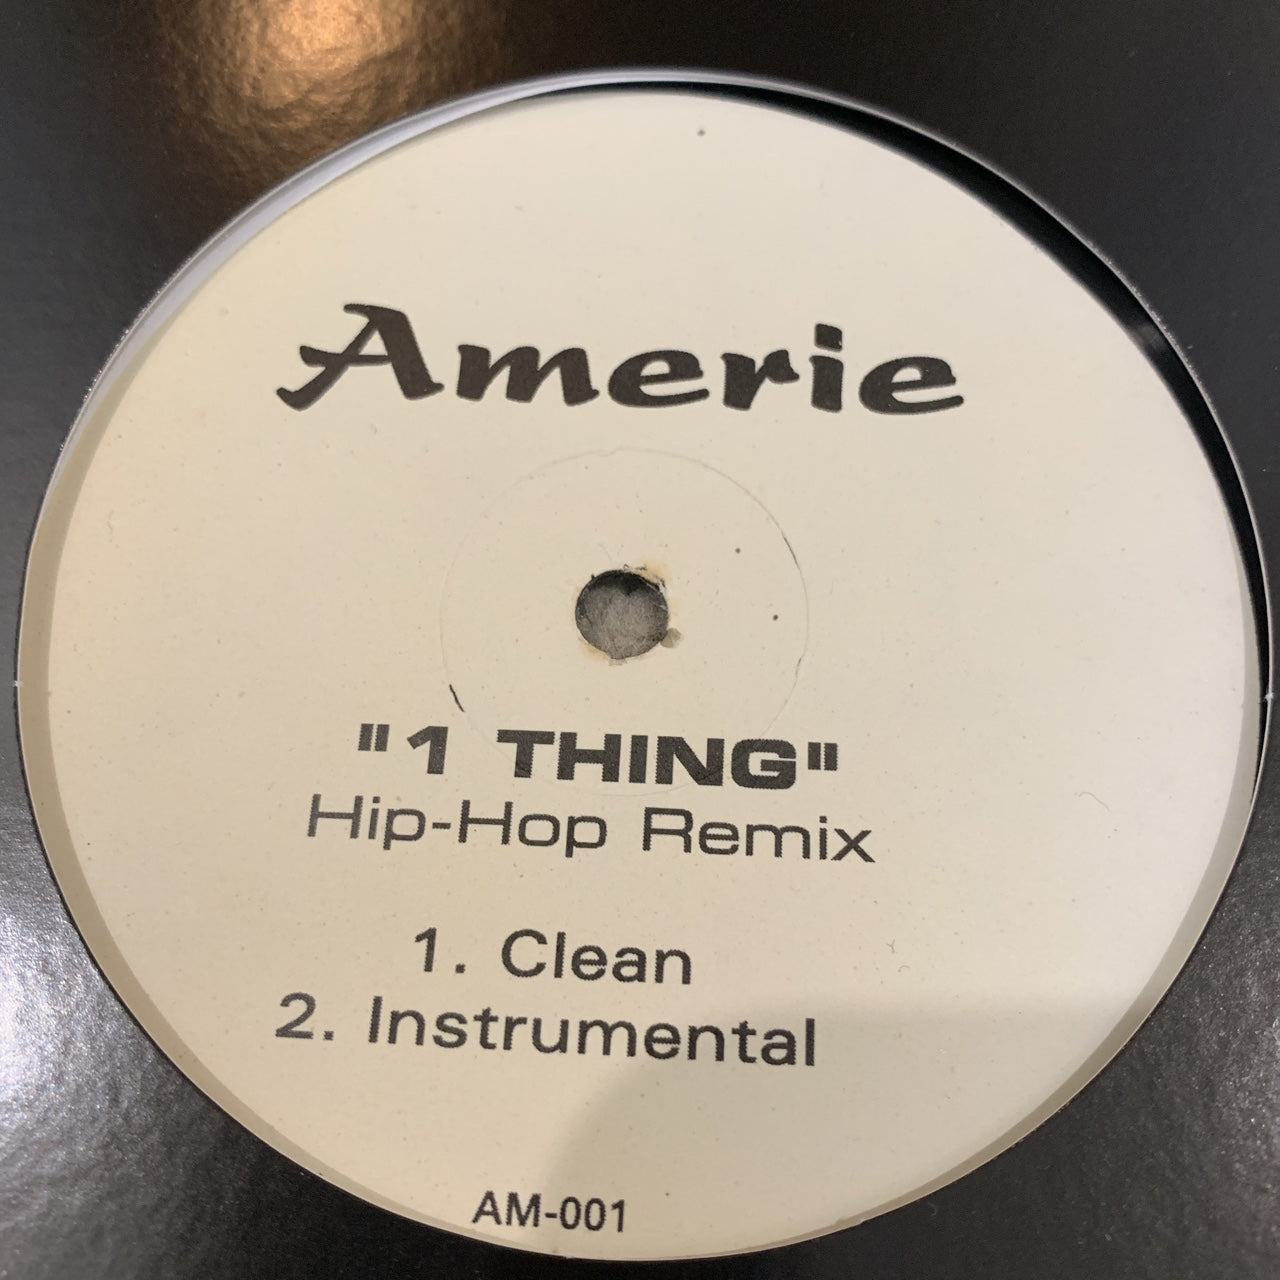 Amerie “1 Thing” Hip Hop Remix